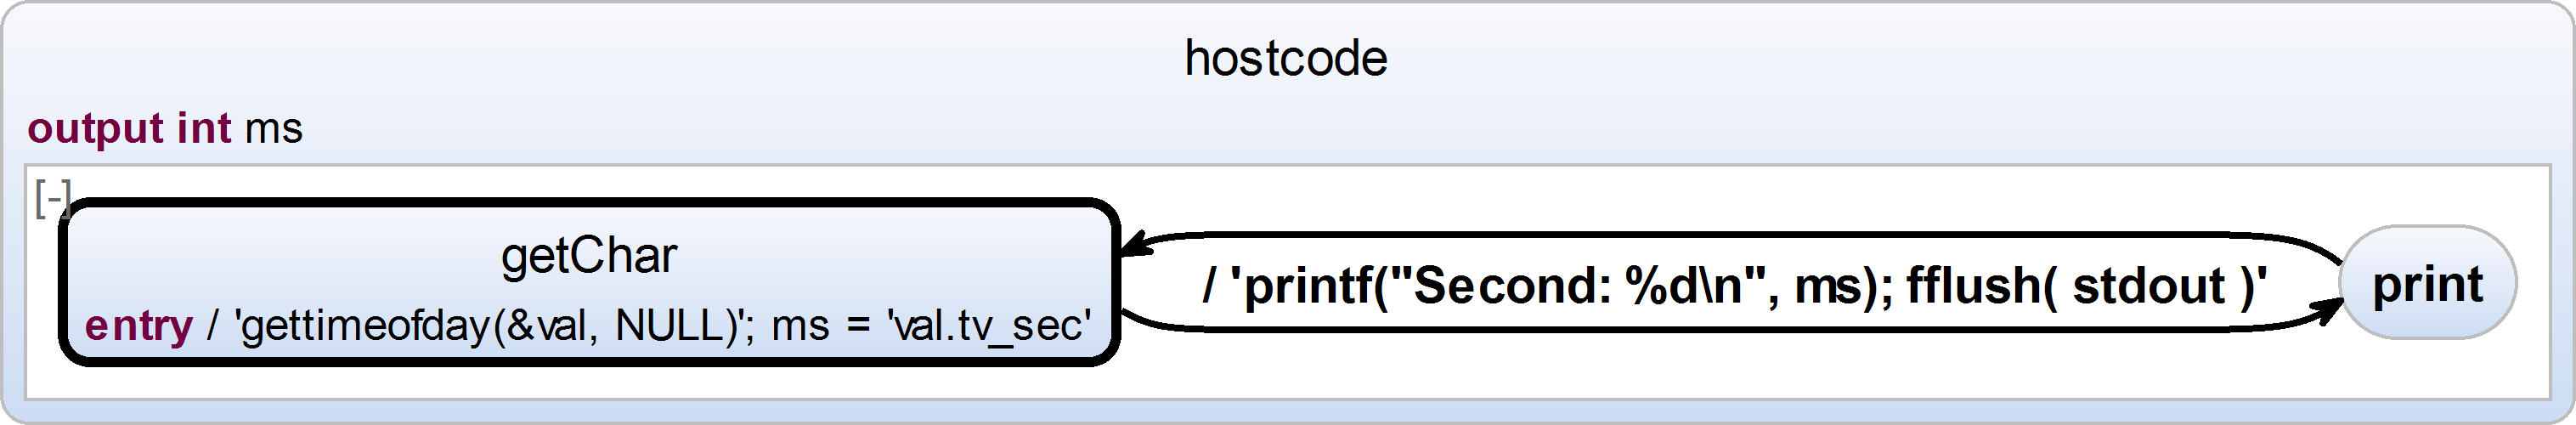 hostcode.png